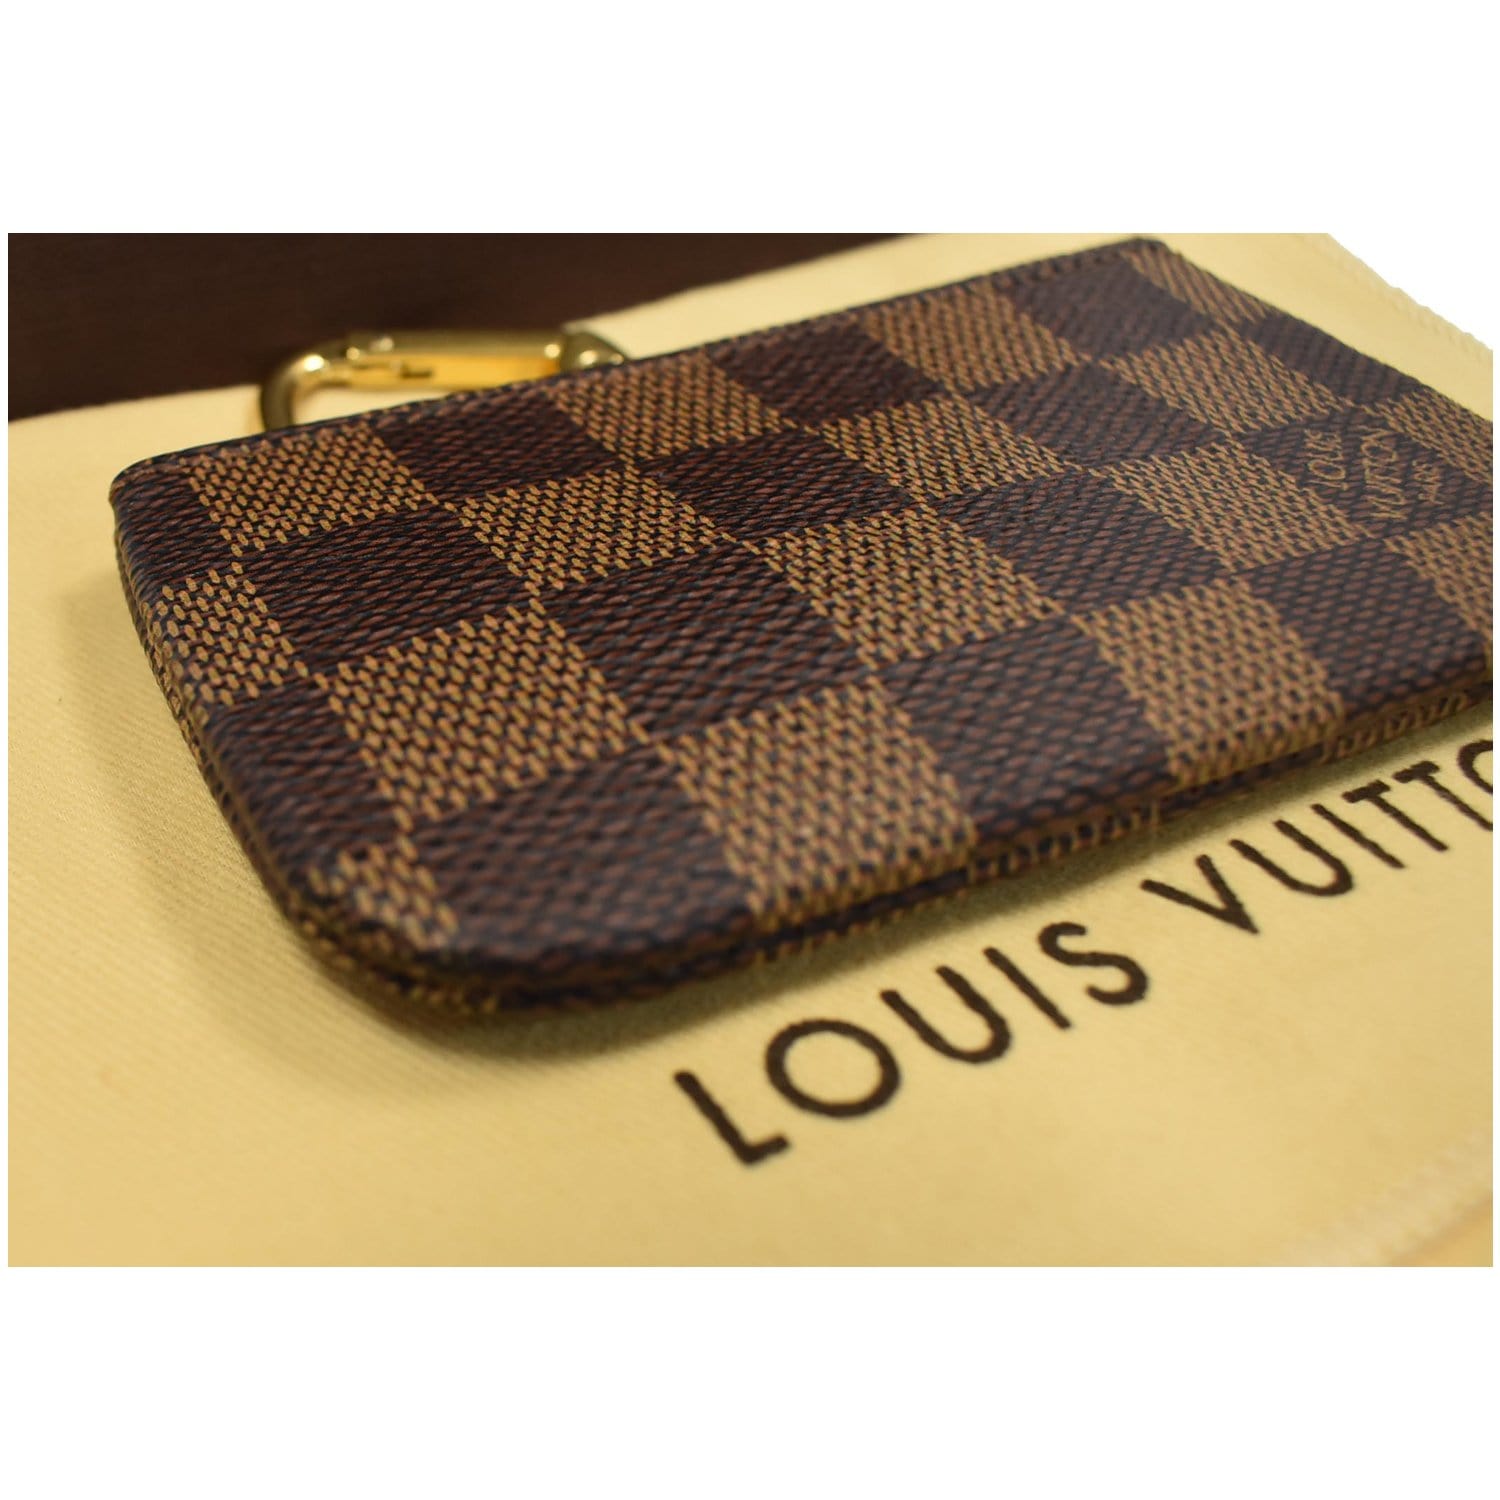 Louis Vuitton Key Pouch Damier Ebene Coin Pouch Wristlet